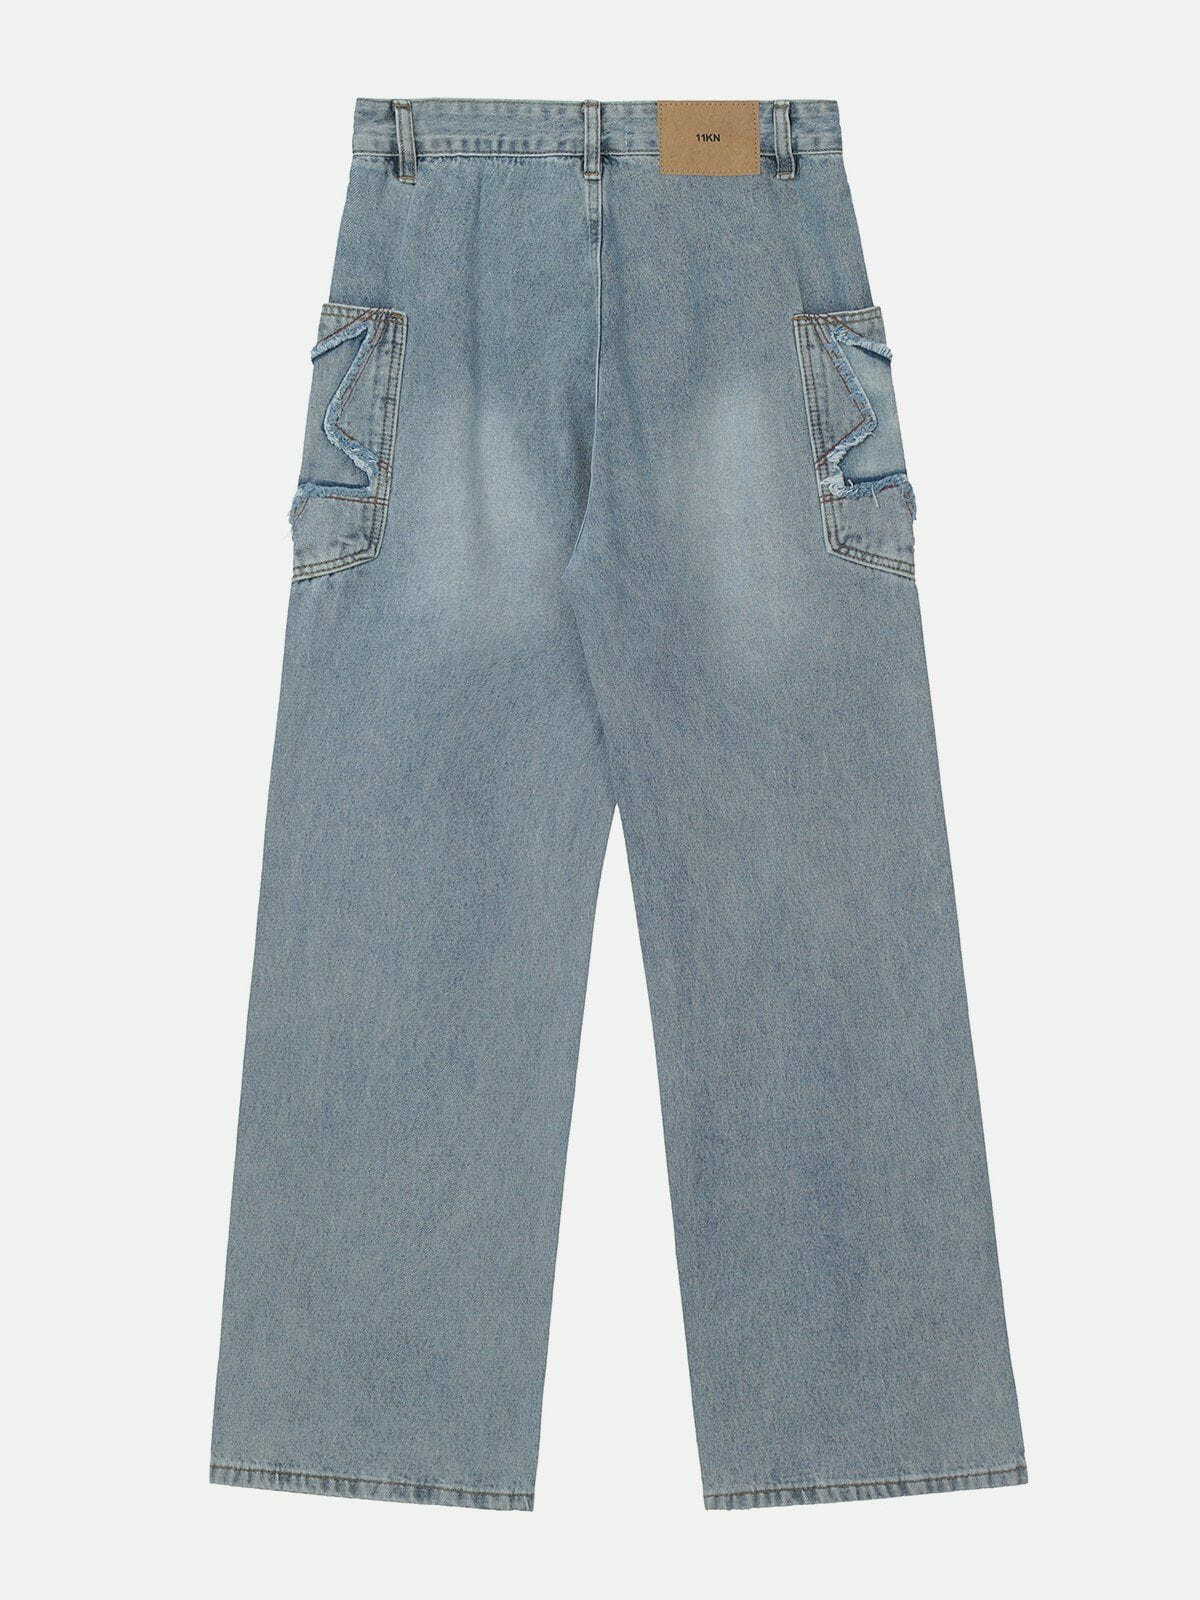 dynamic starprint jeans youthful & trendy 2622